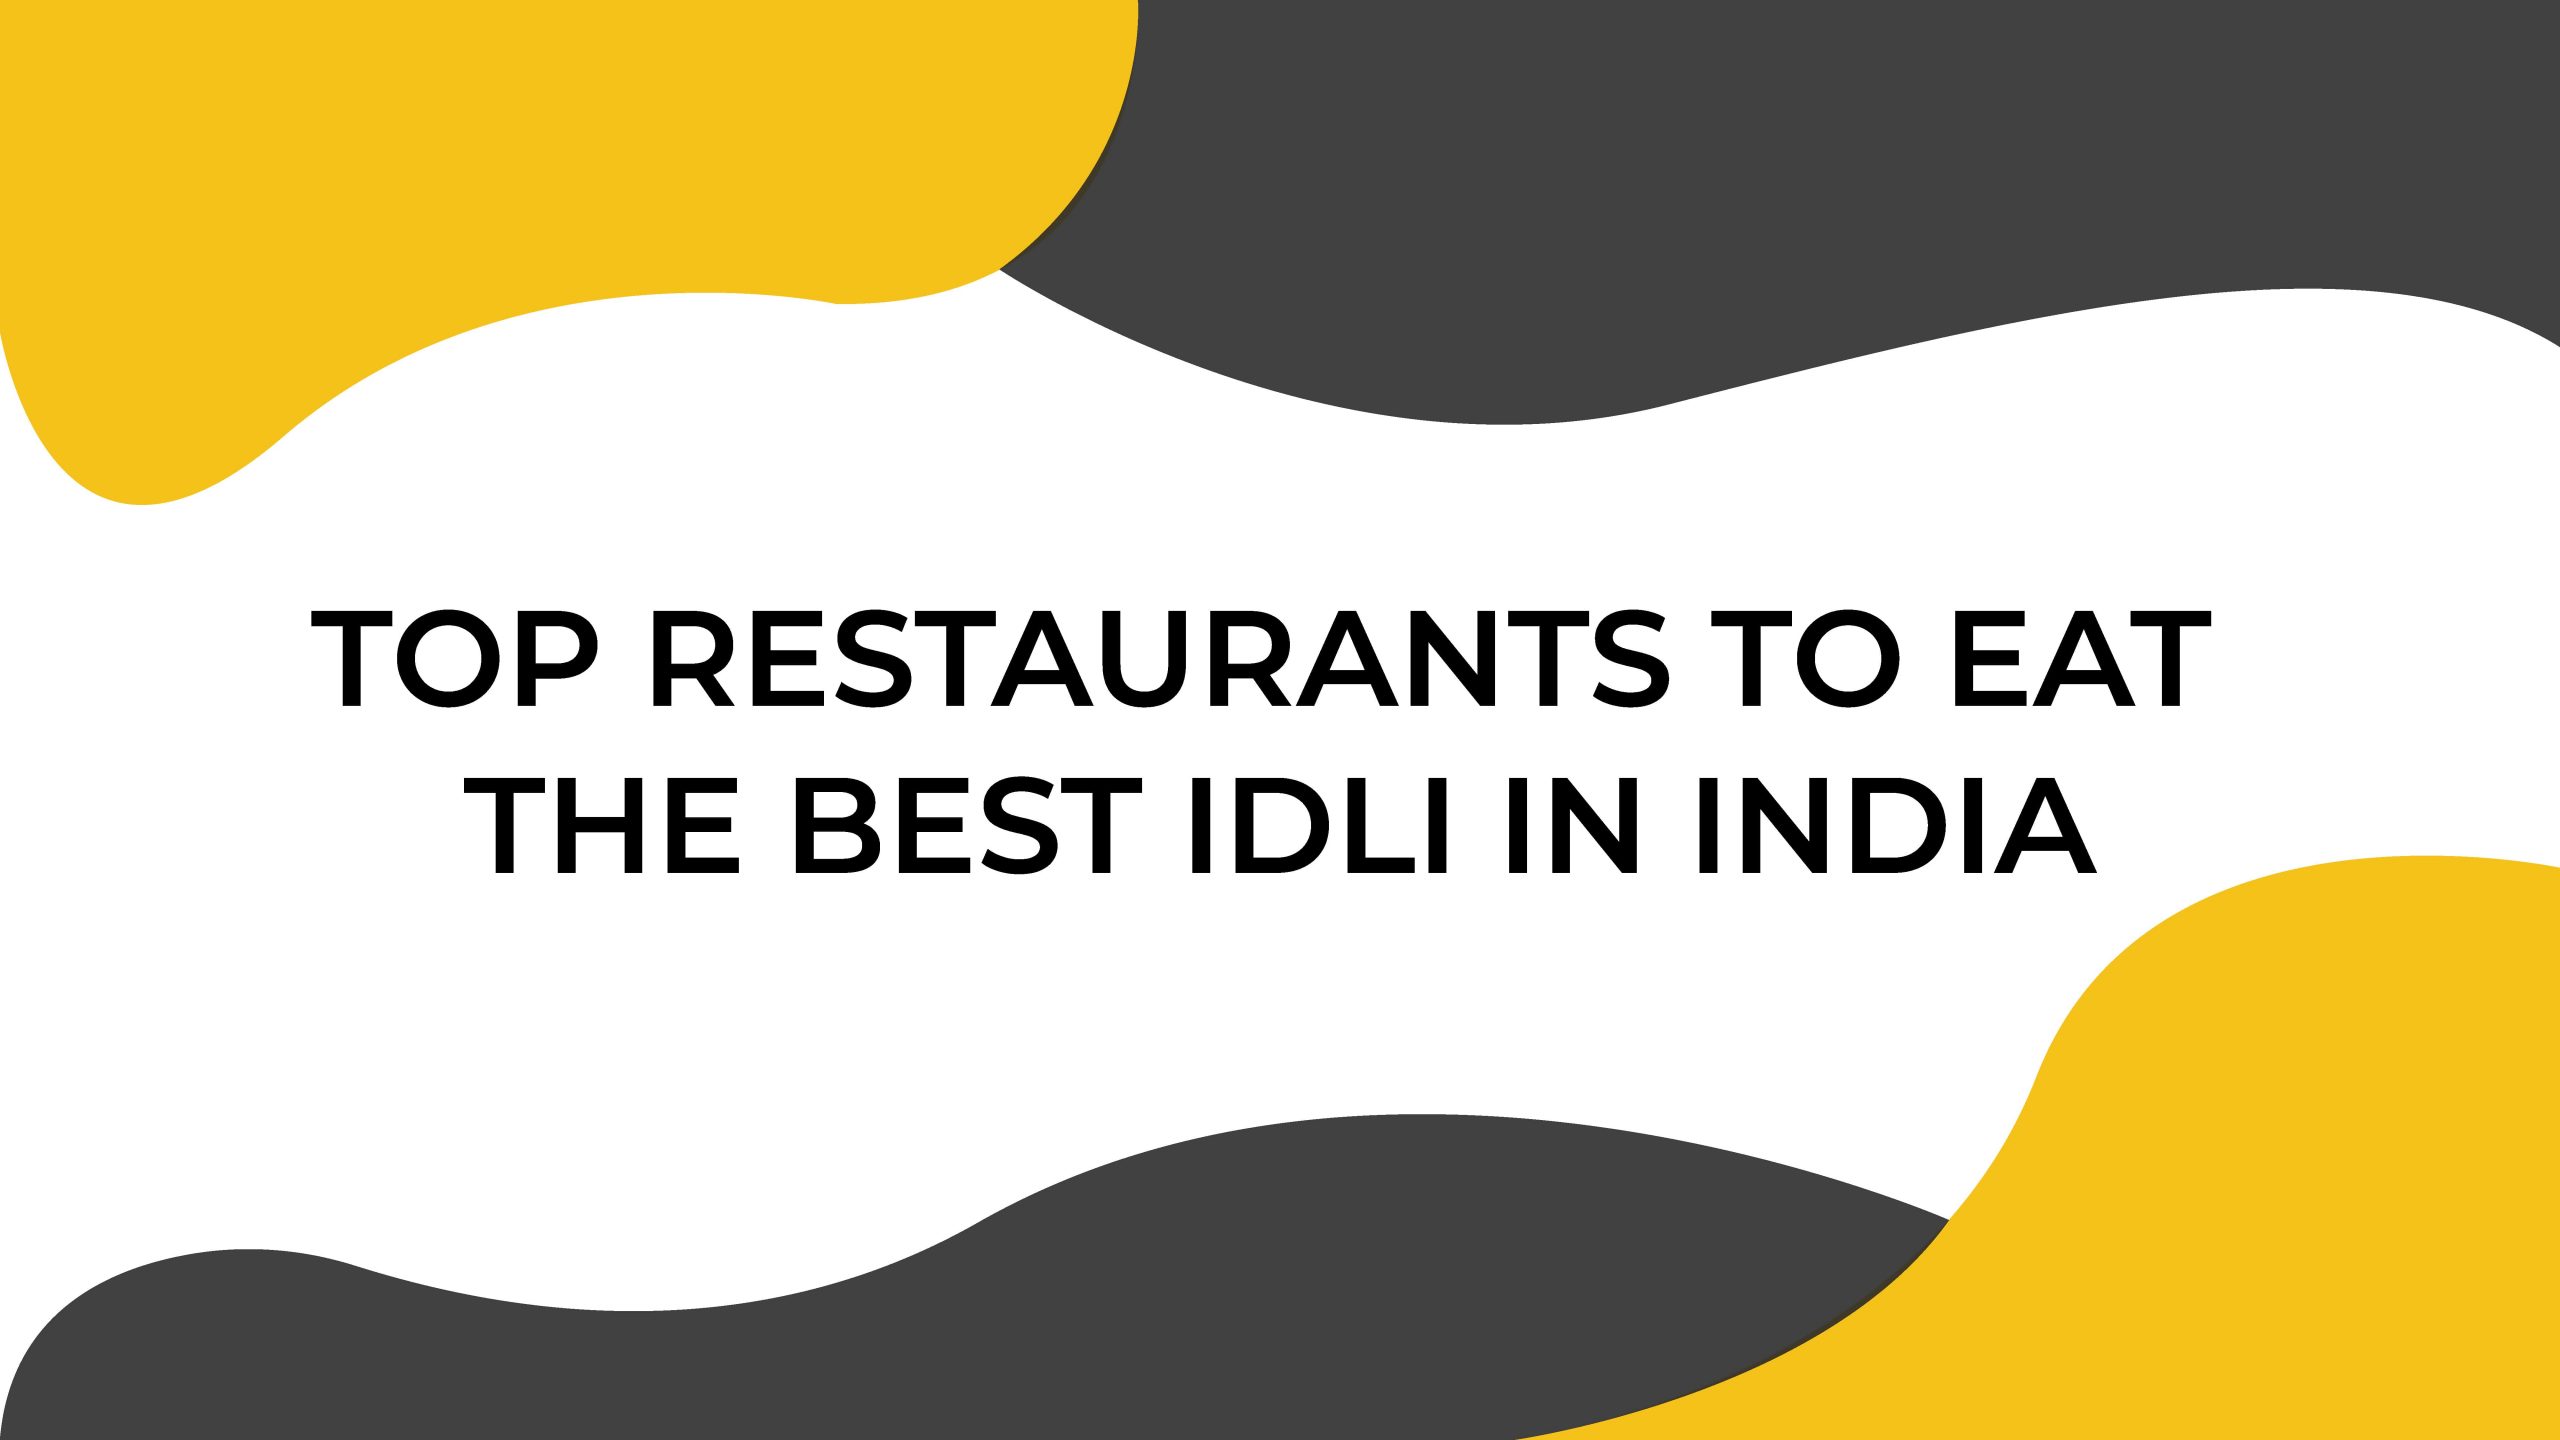 Top restaurants to eat the best idli in India